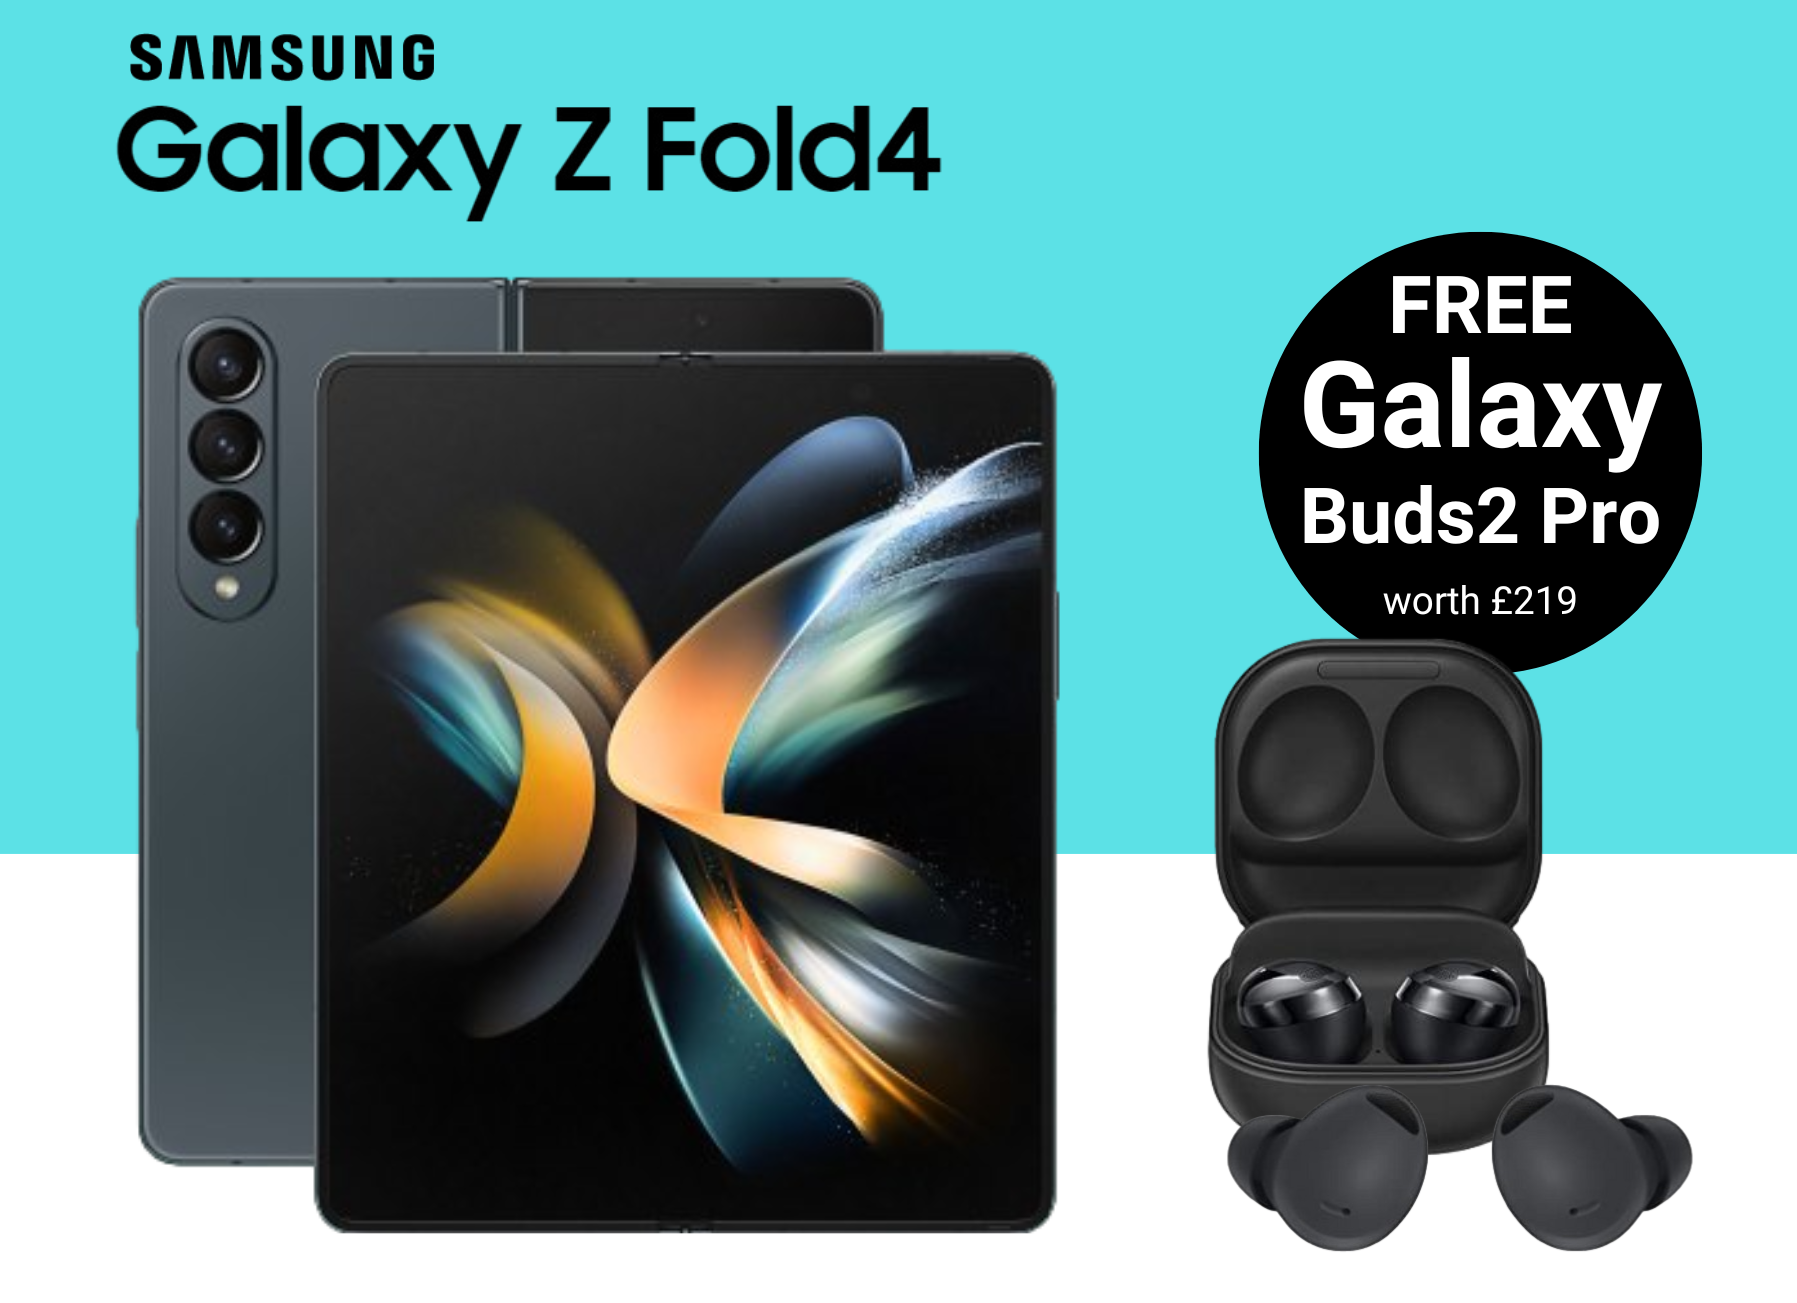 Samsung Z Fold4 Deals with Free Galaxy Buds2 Pro